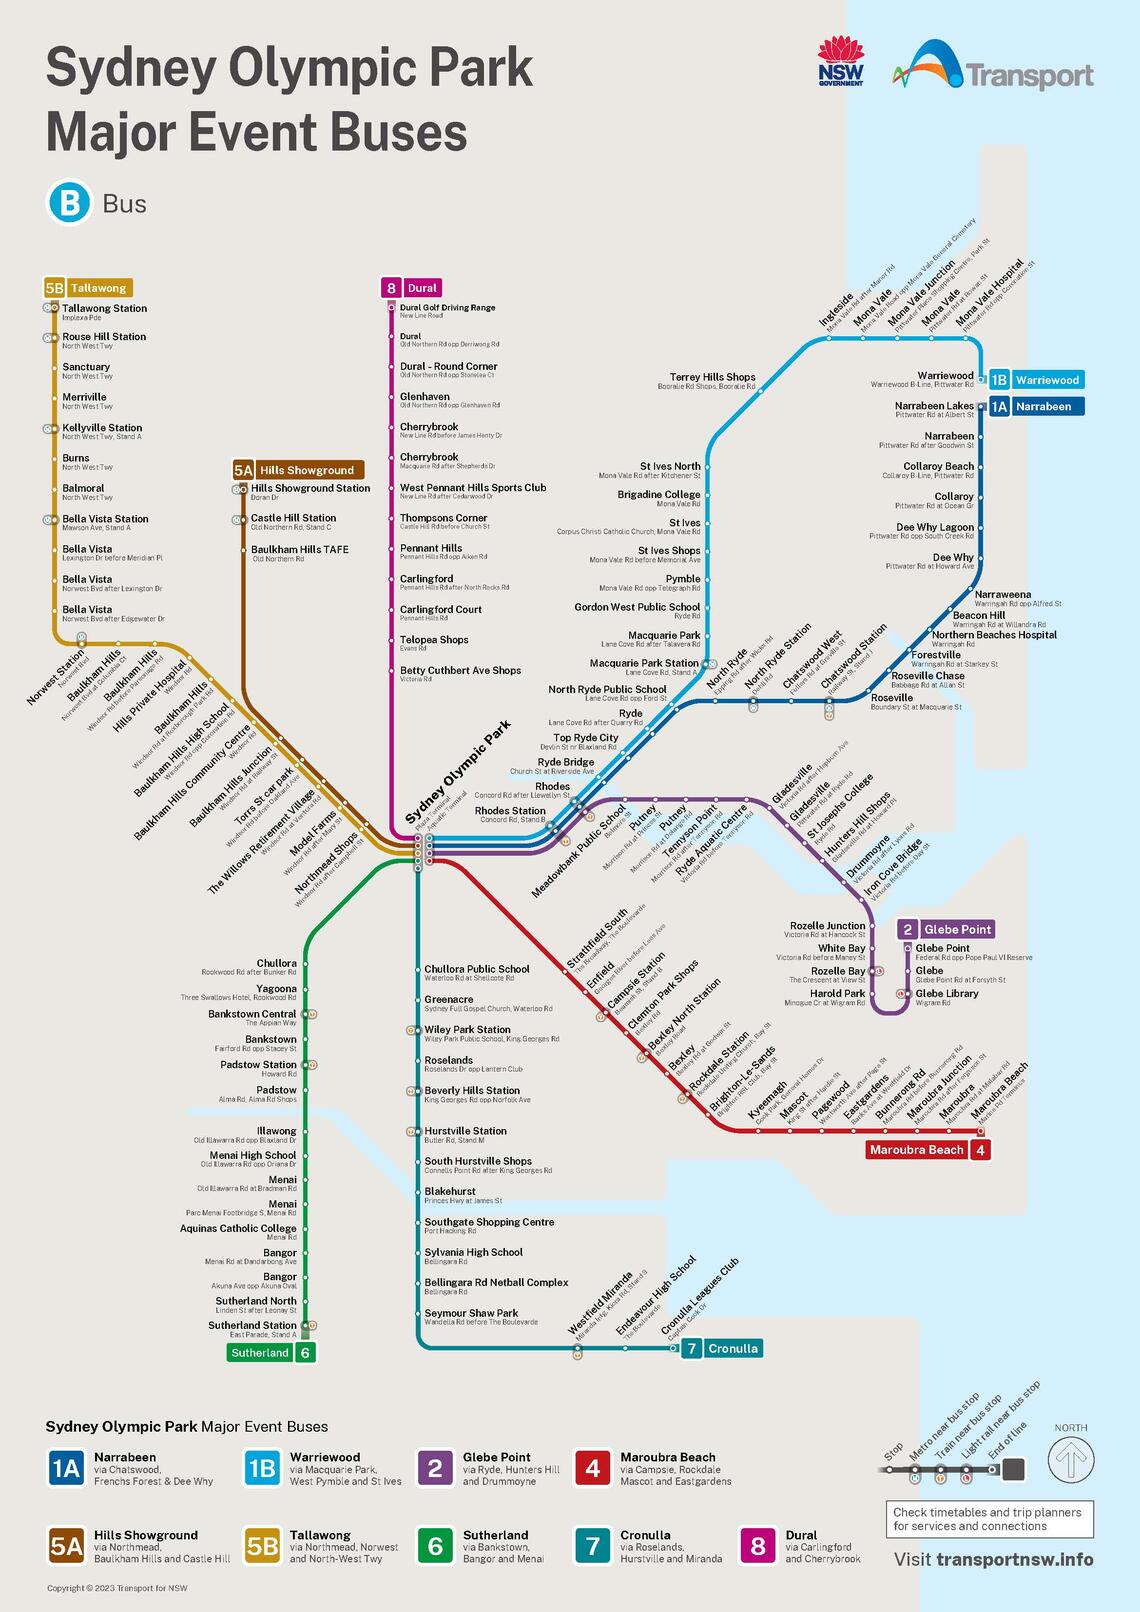 Sydney Olympic Park Major Event Bus route map